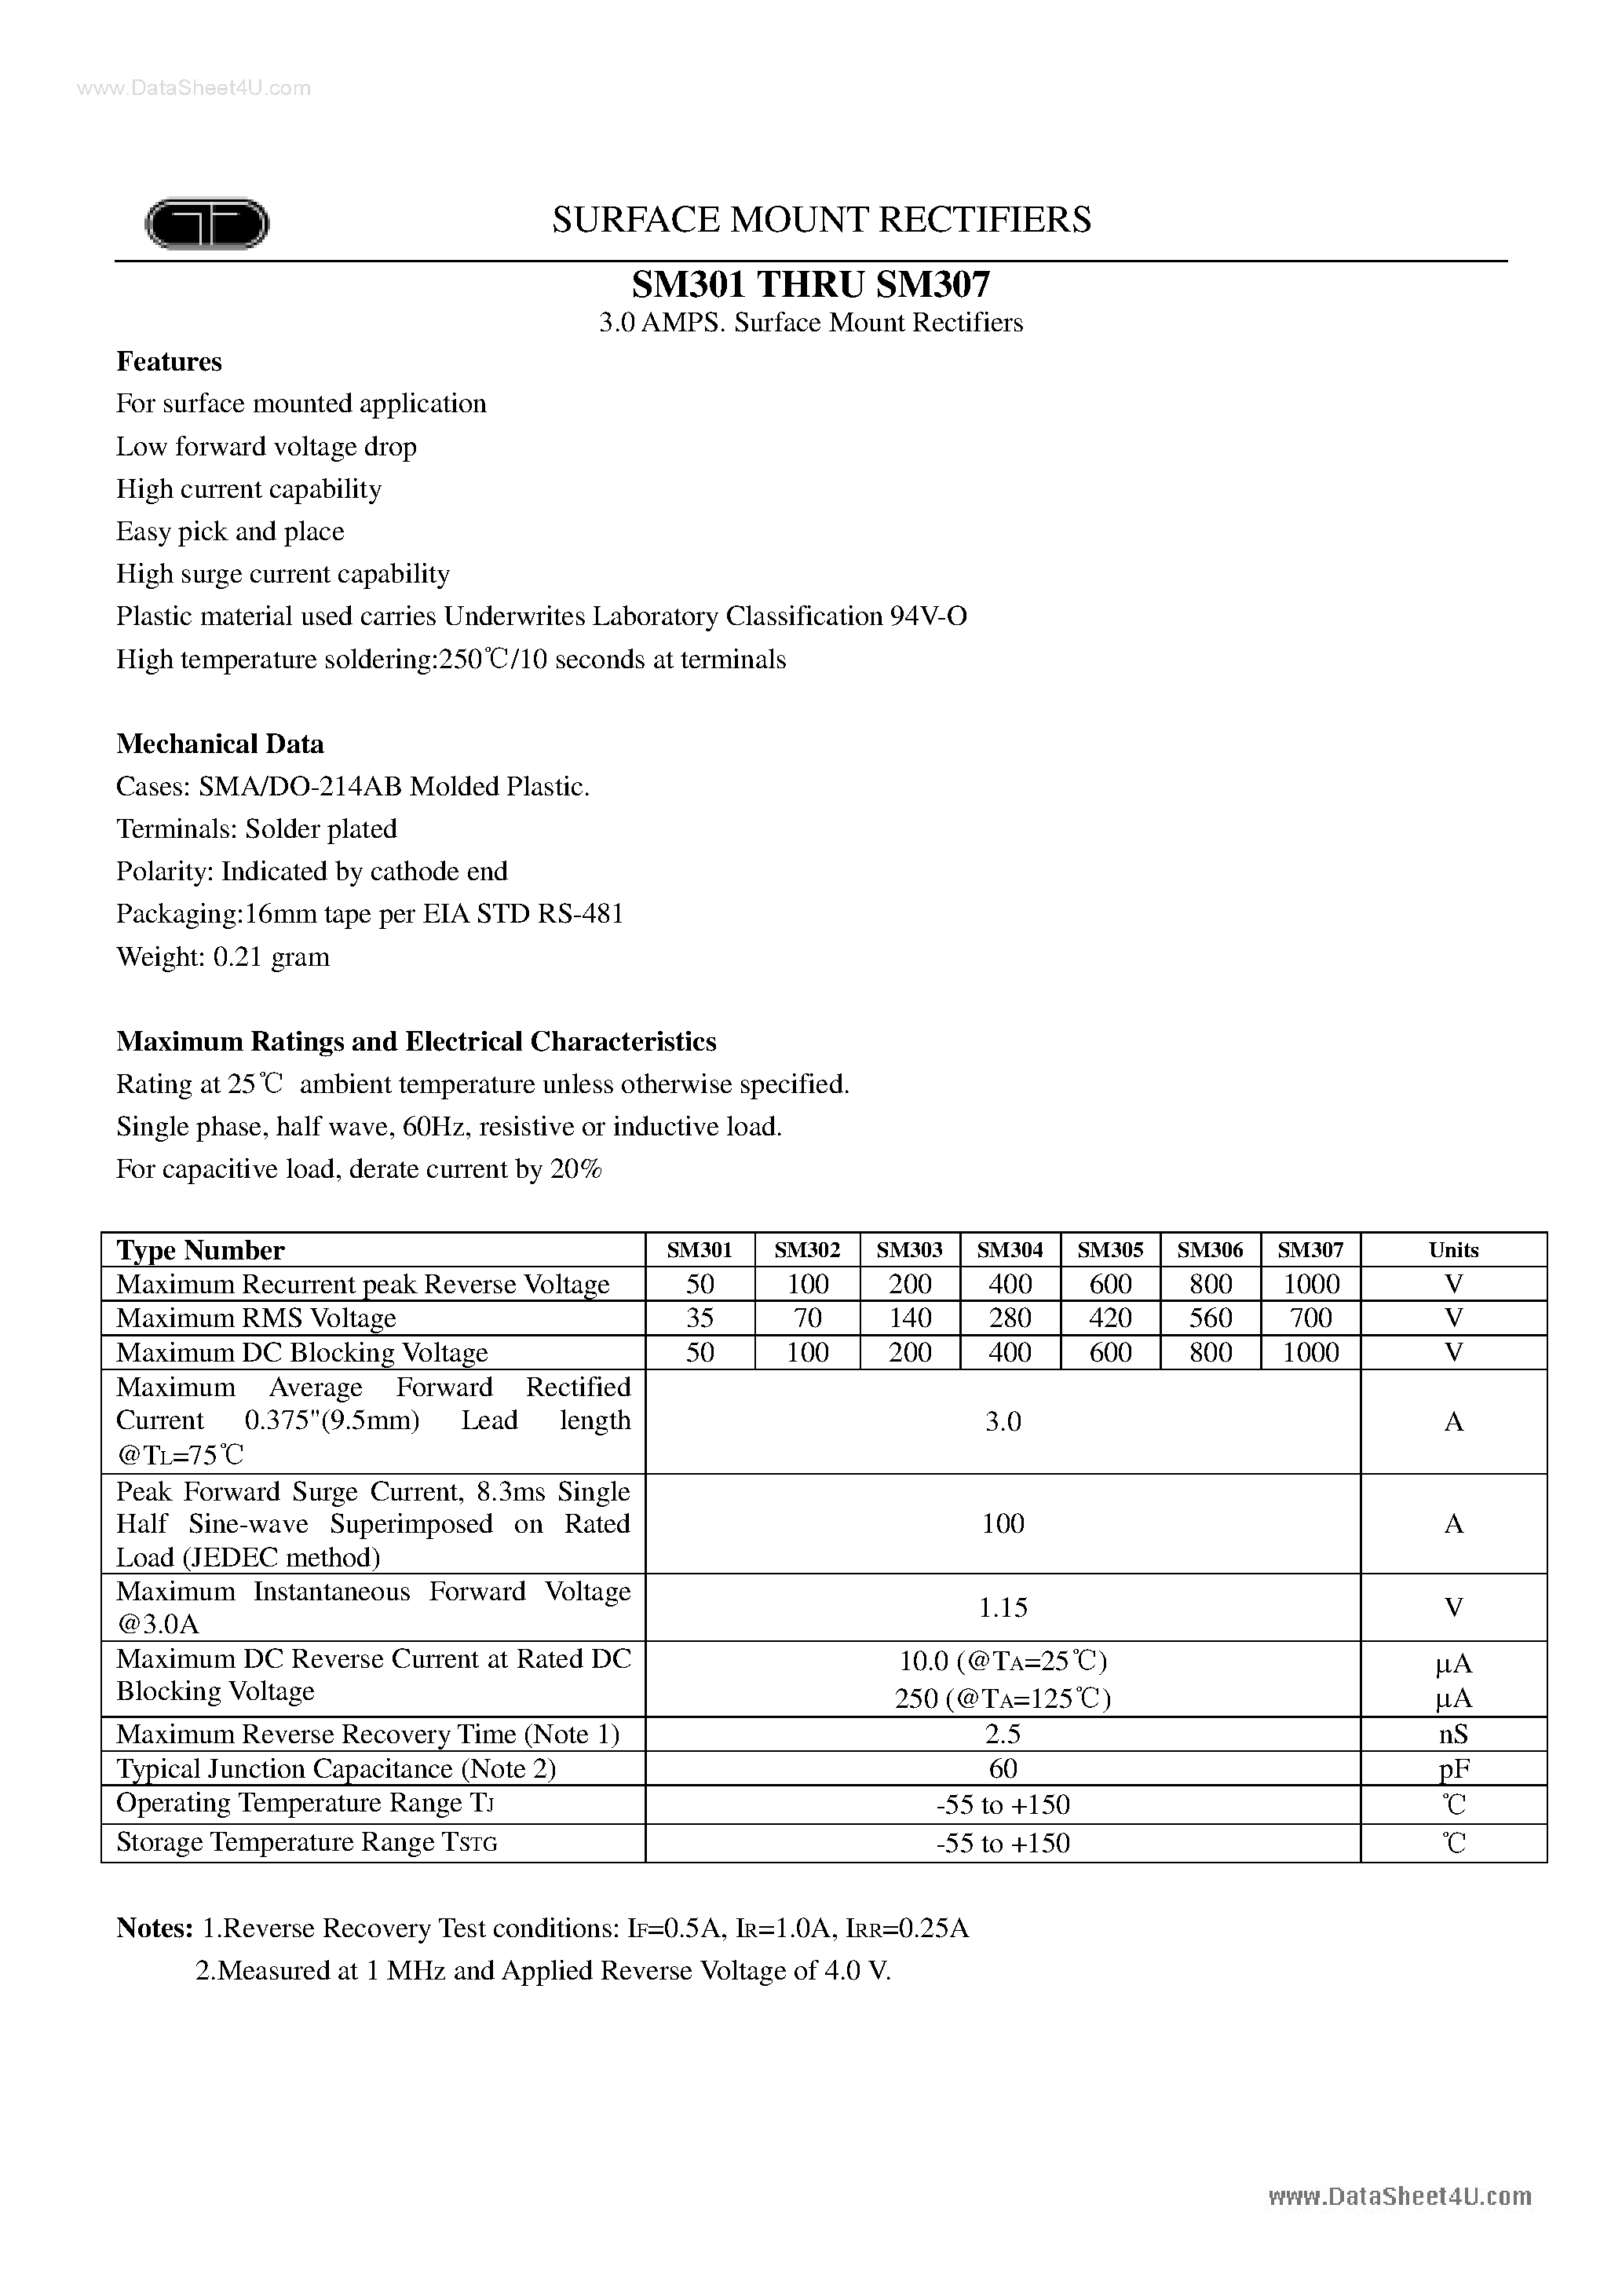 Даташит SM301 - (SM301 - SM307) Surface Mount Rectifiers страница 1